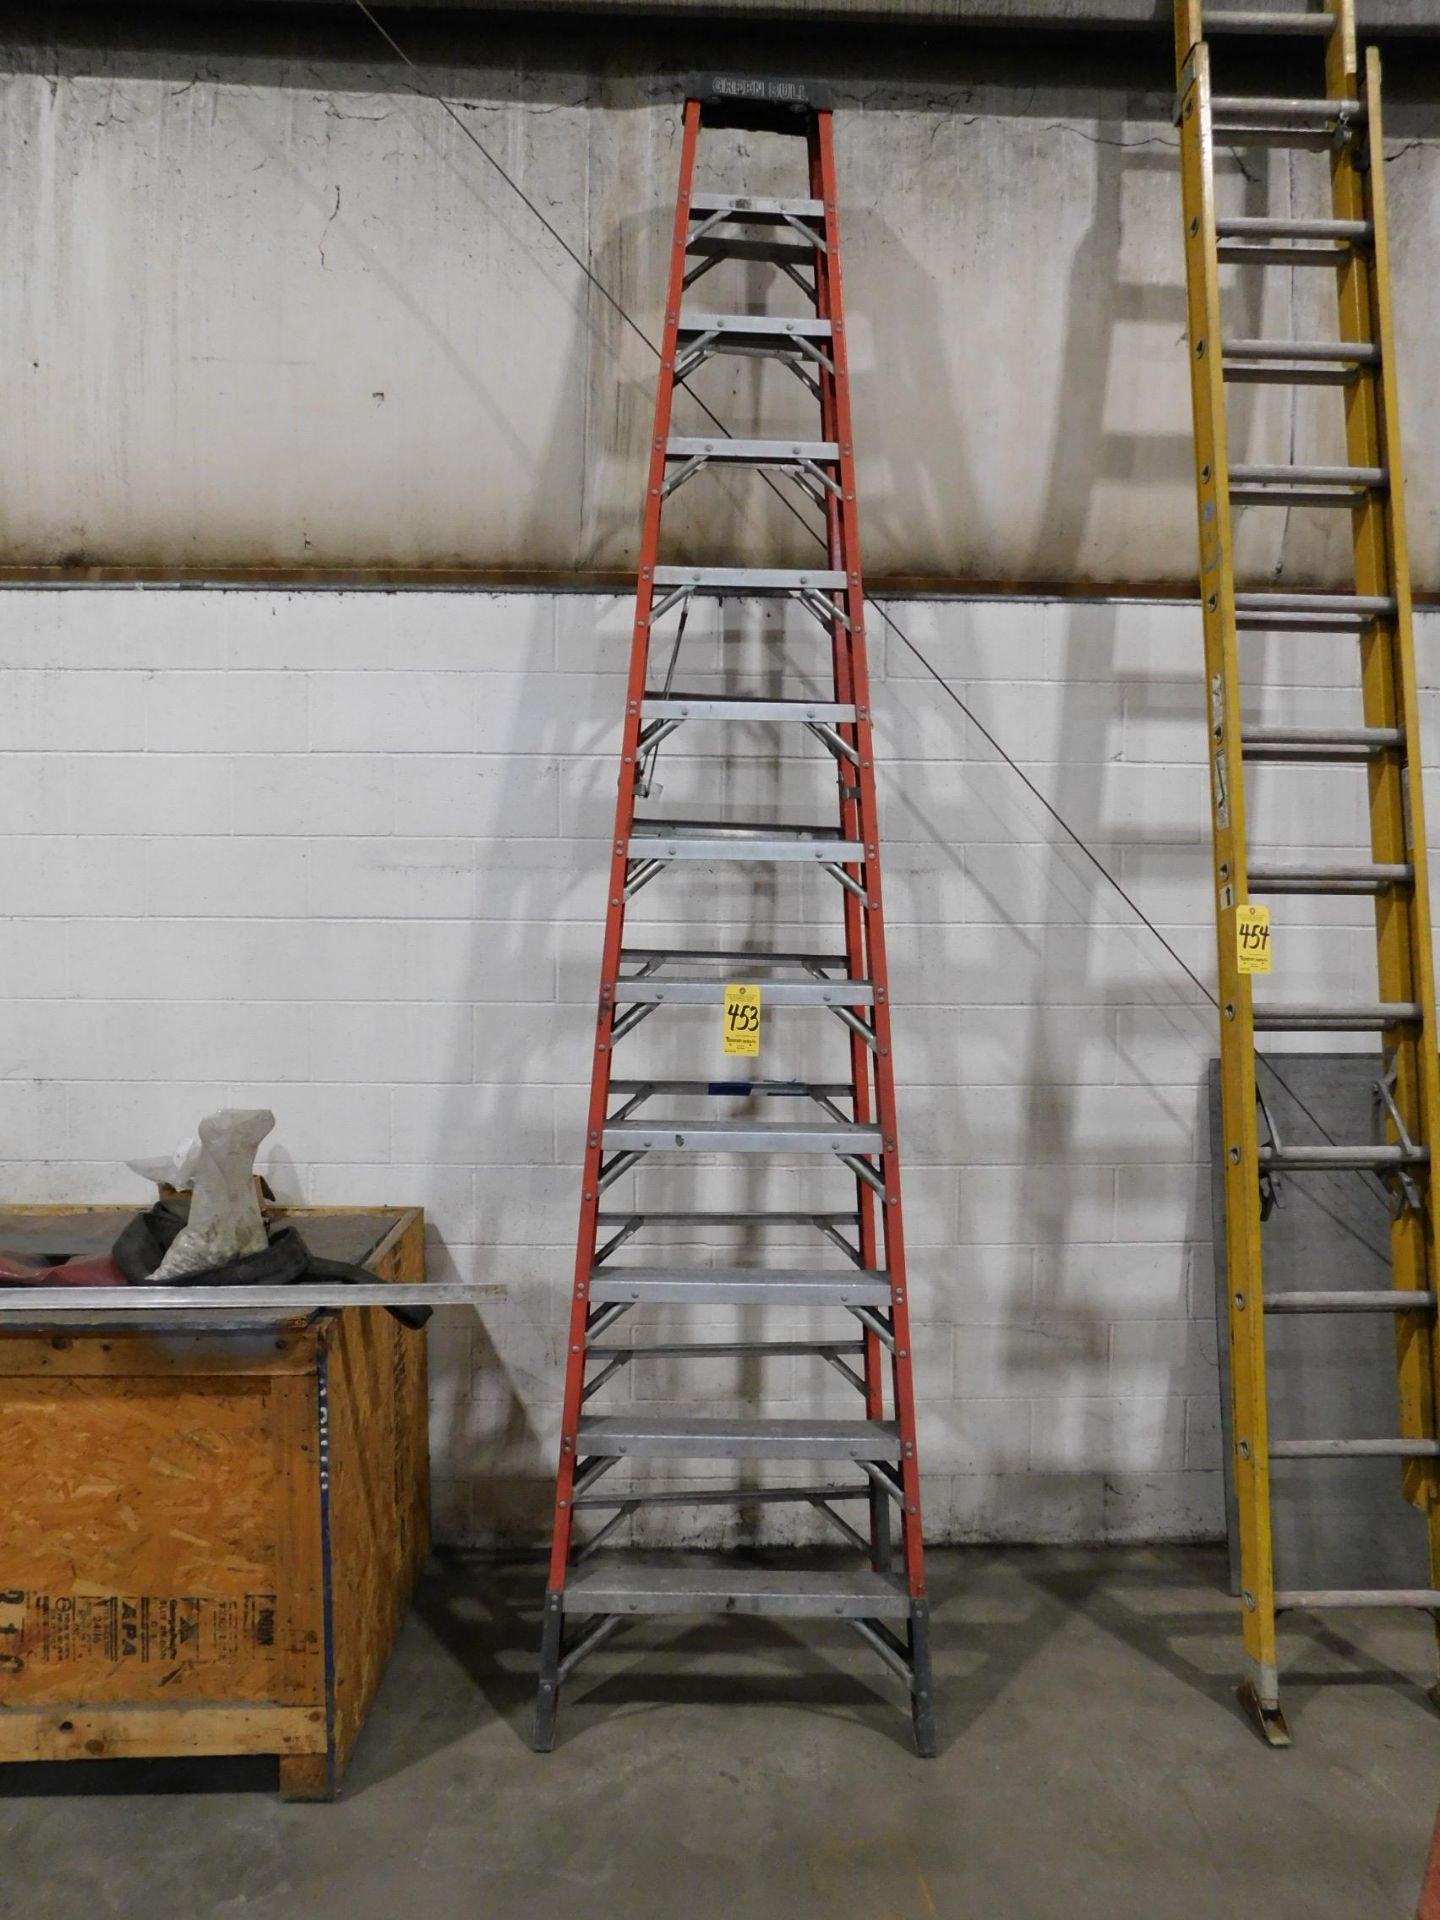 12' Fiberglass Step Ladder